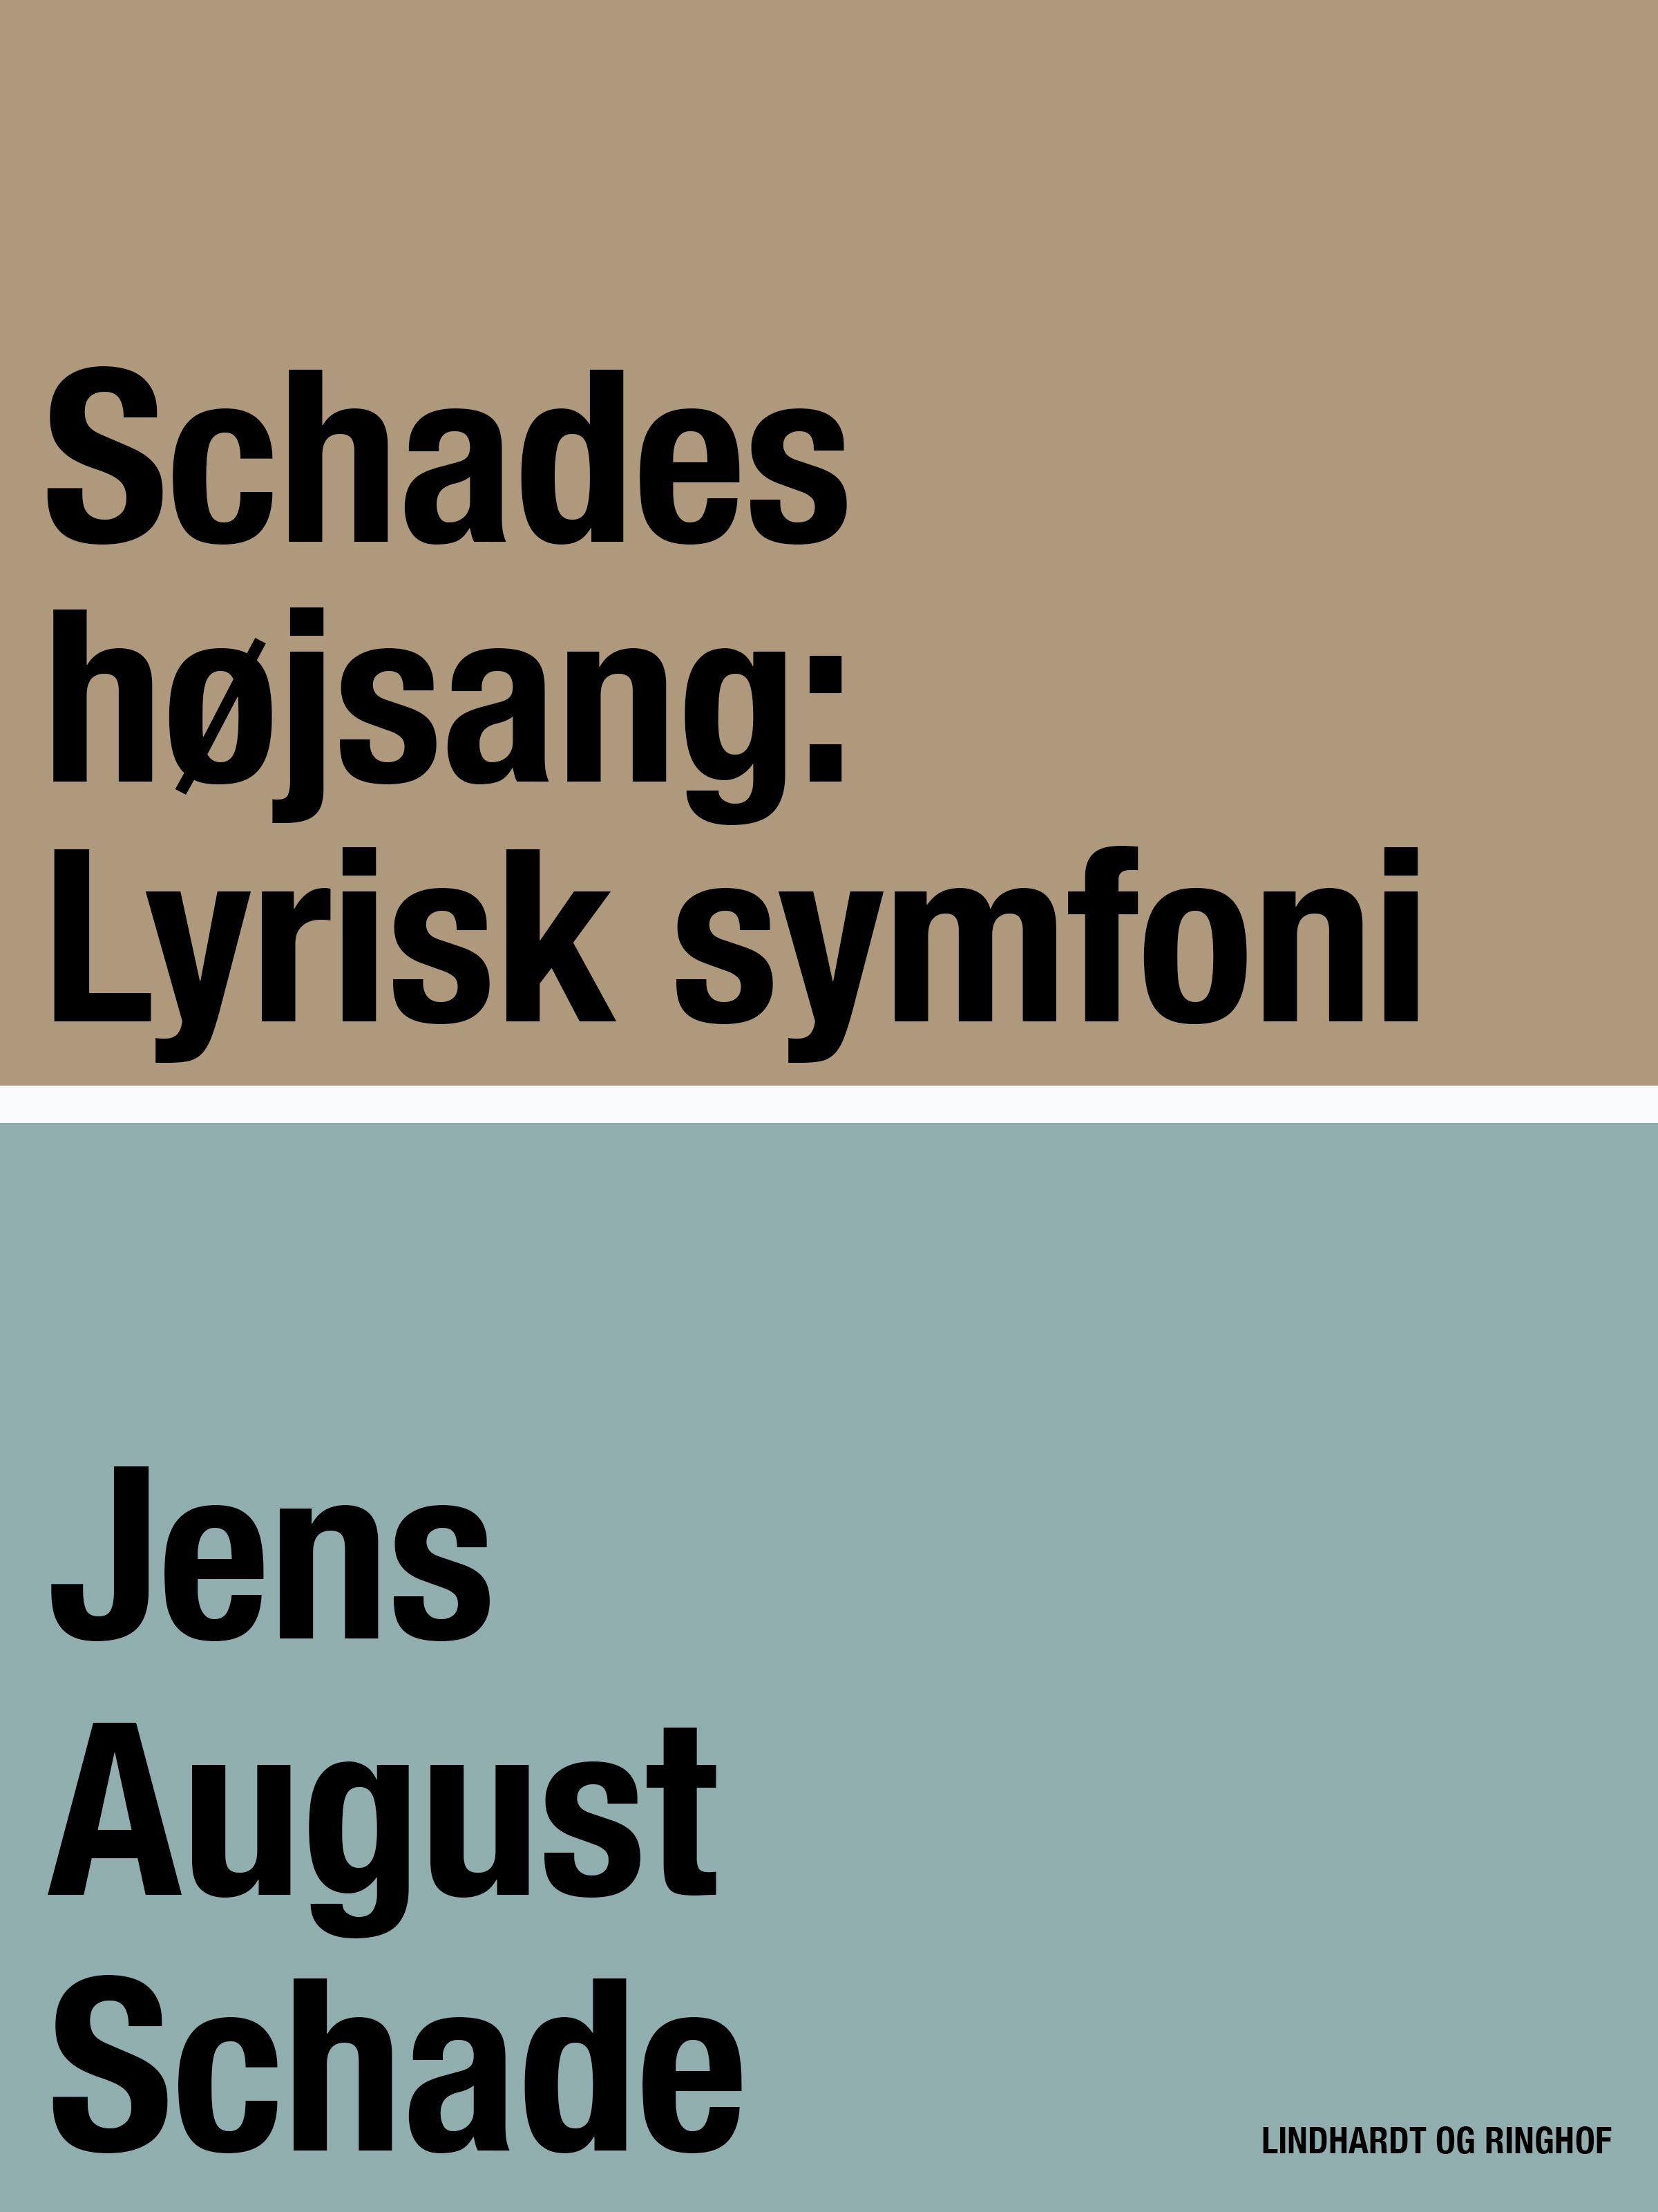 Schades højsang: Lyrisk symfoni, e-bok av Jens August Schade